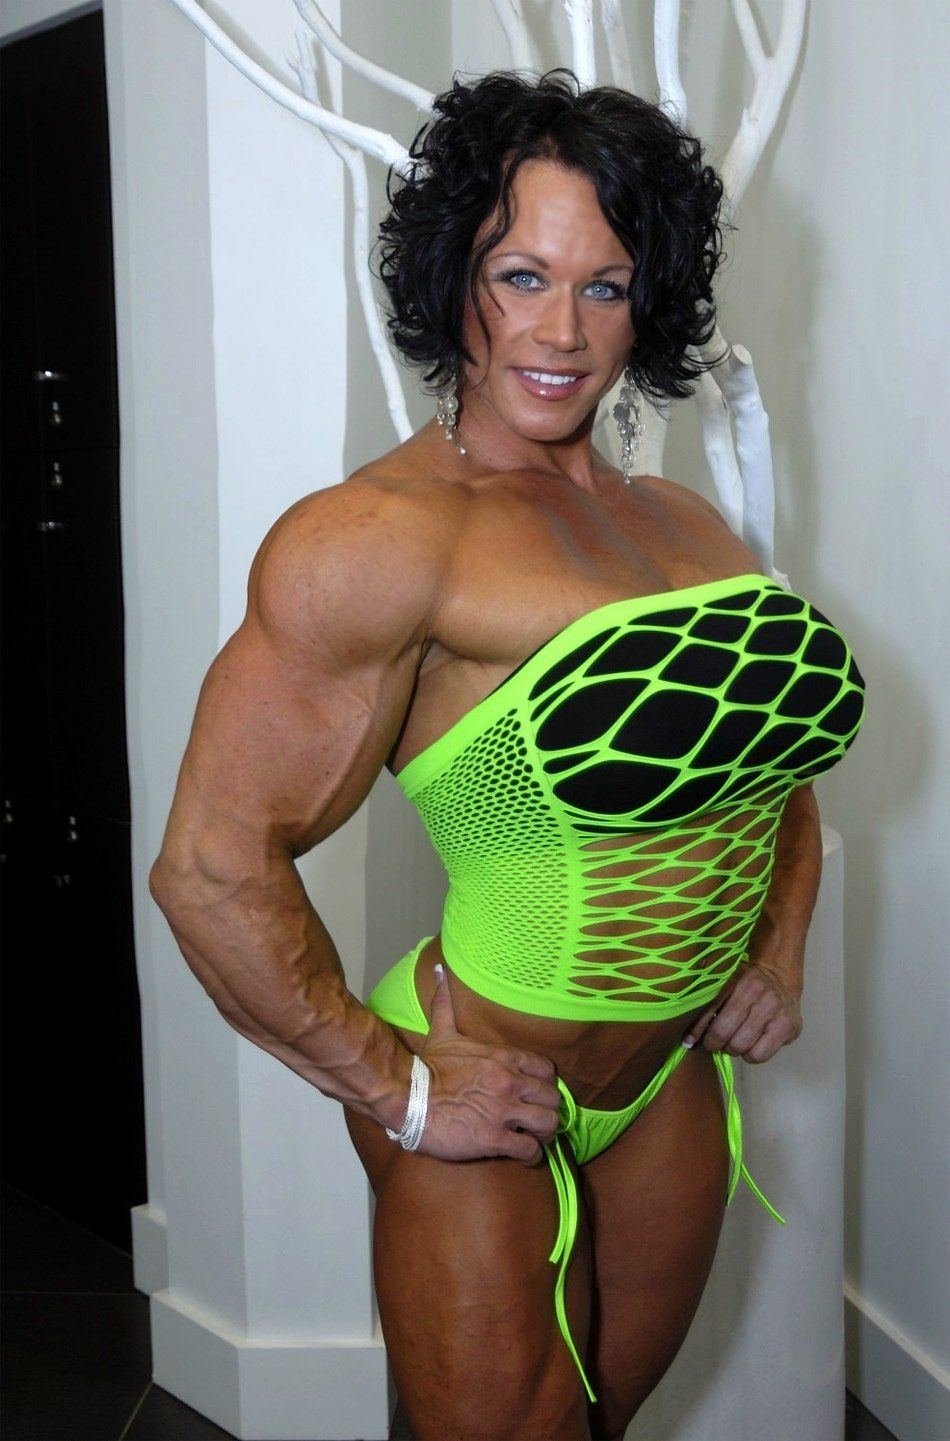 Female Bodybuilder Wearing A Strapon